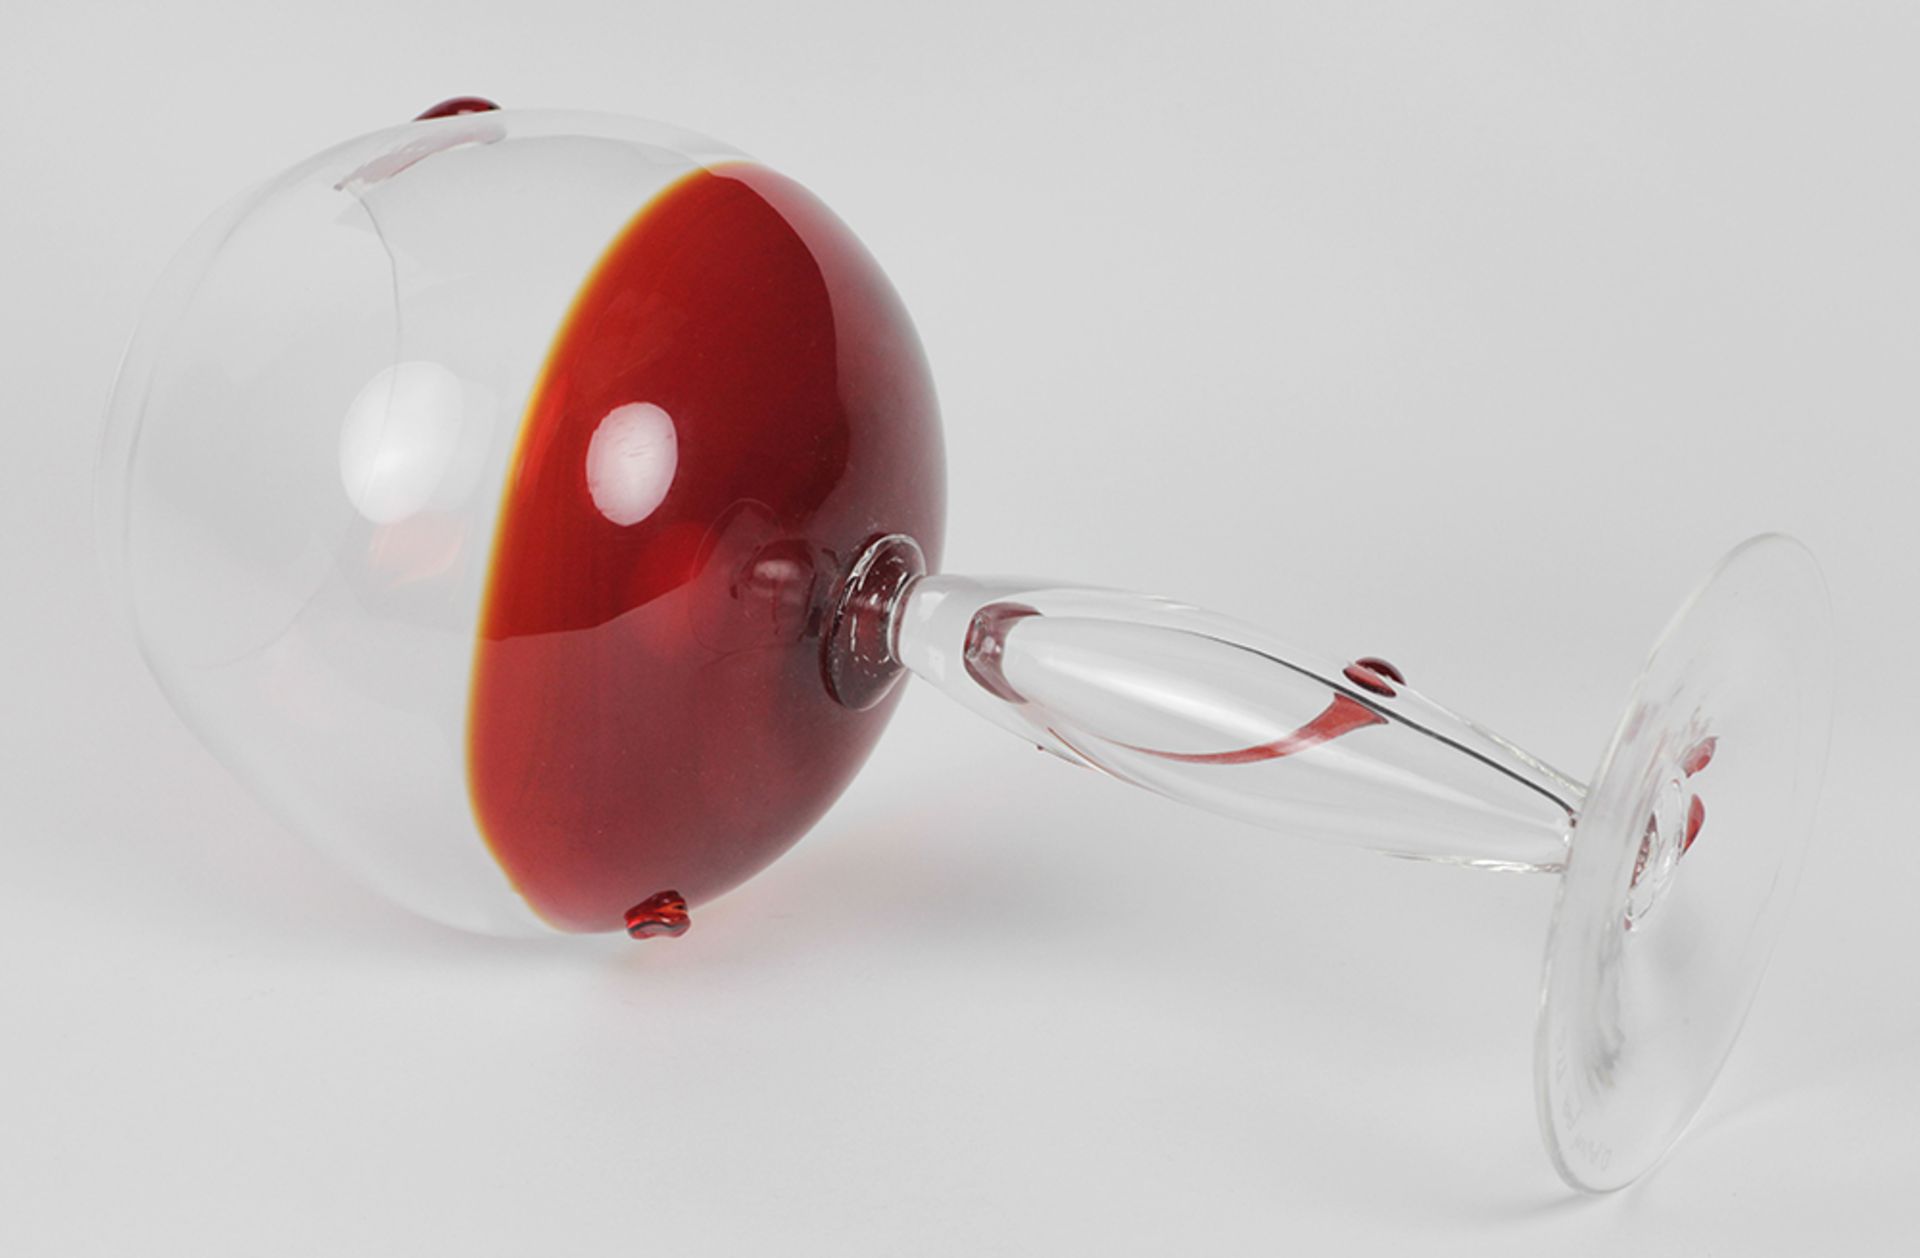 Limited Edn Venetain 'Gocce' Artistic Wine Glass By Maria Grazia Rosin 2004 - Image 5 of 12